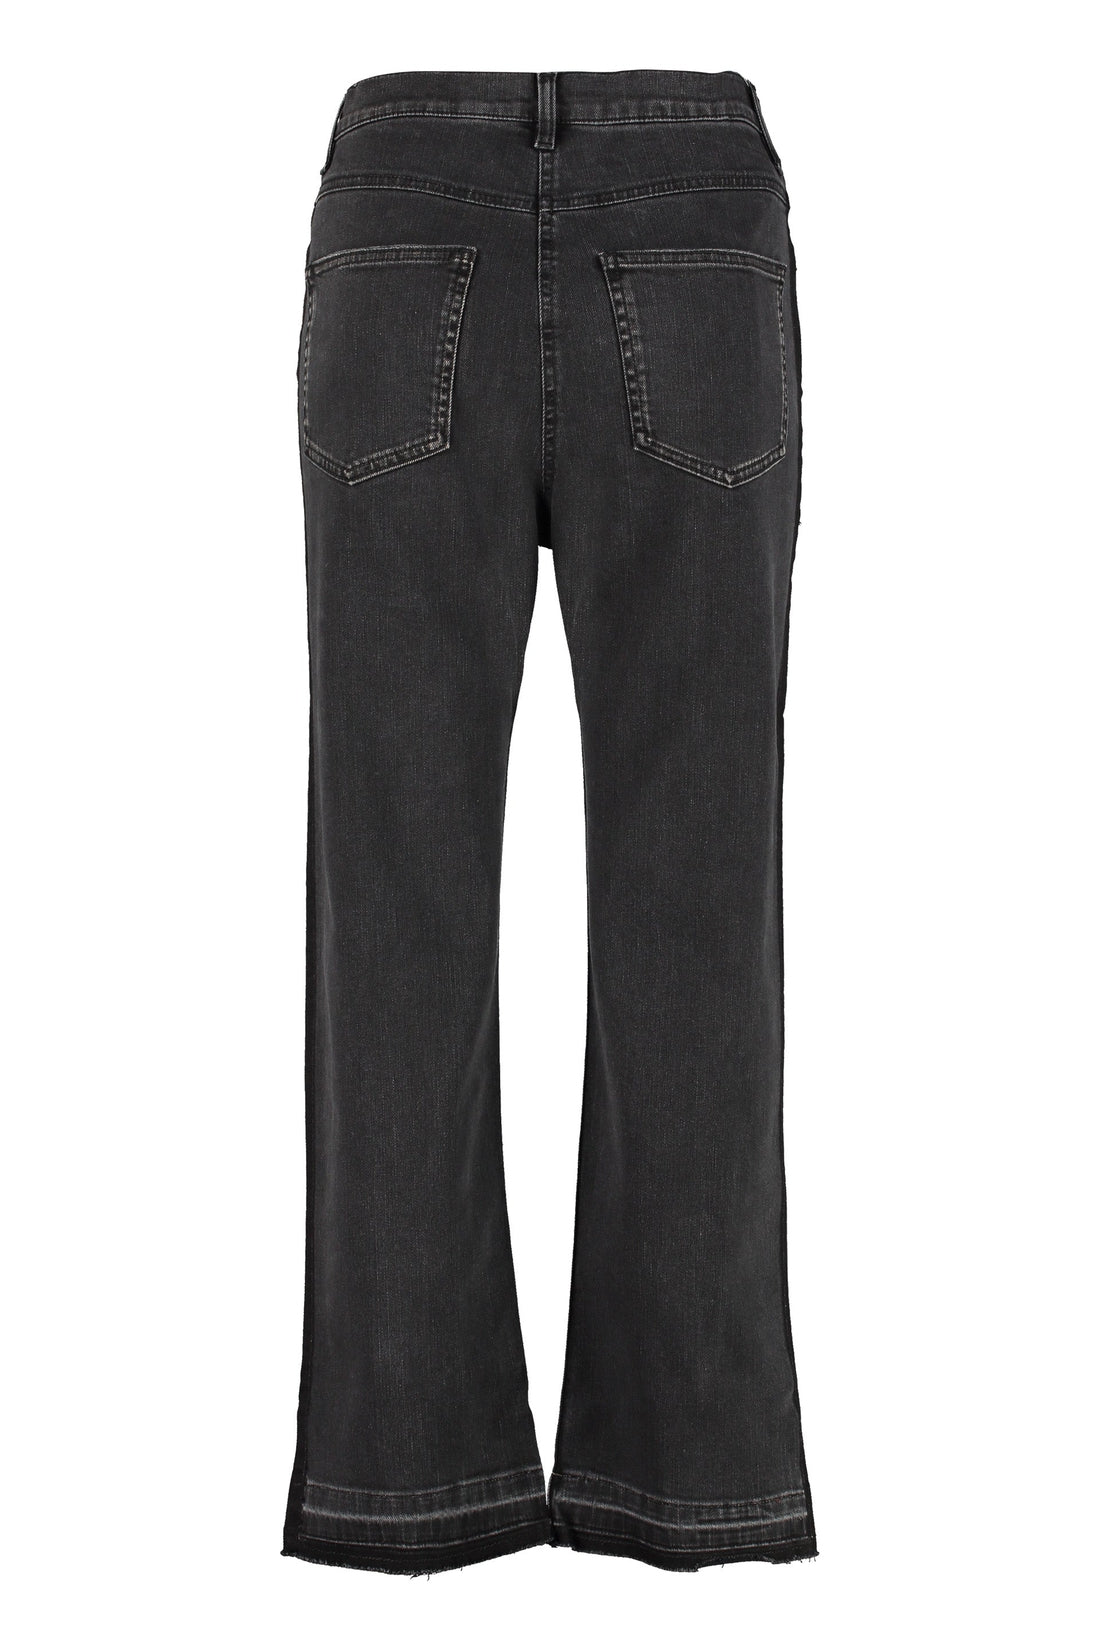 MCQ-OUTLET-SALE-Side stripe cropped jeans-ARCHIVIST